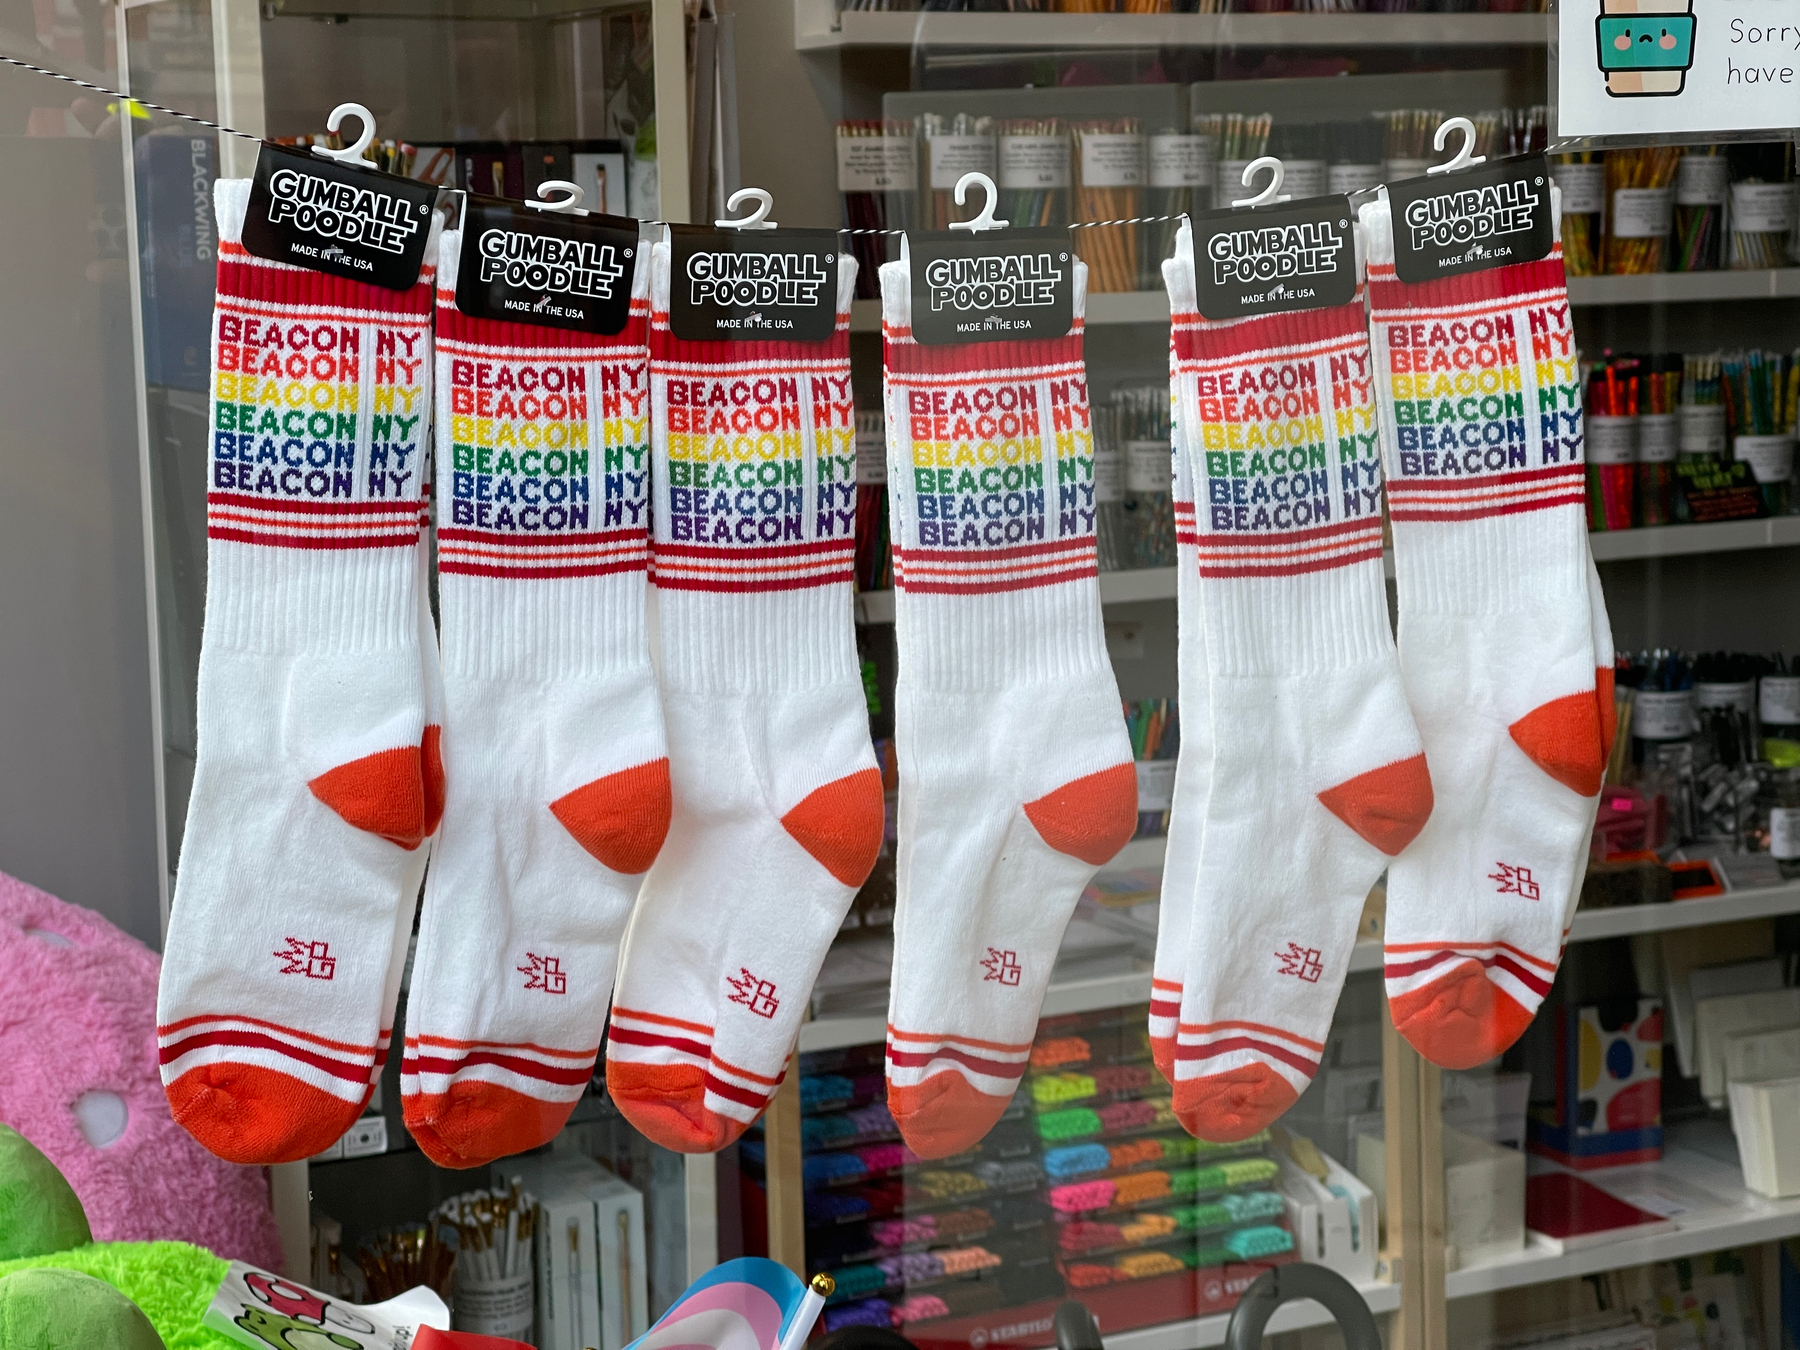 Beacon, NY labeled socks in gay pride colors.